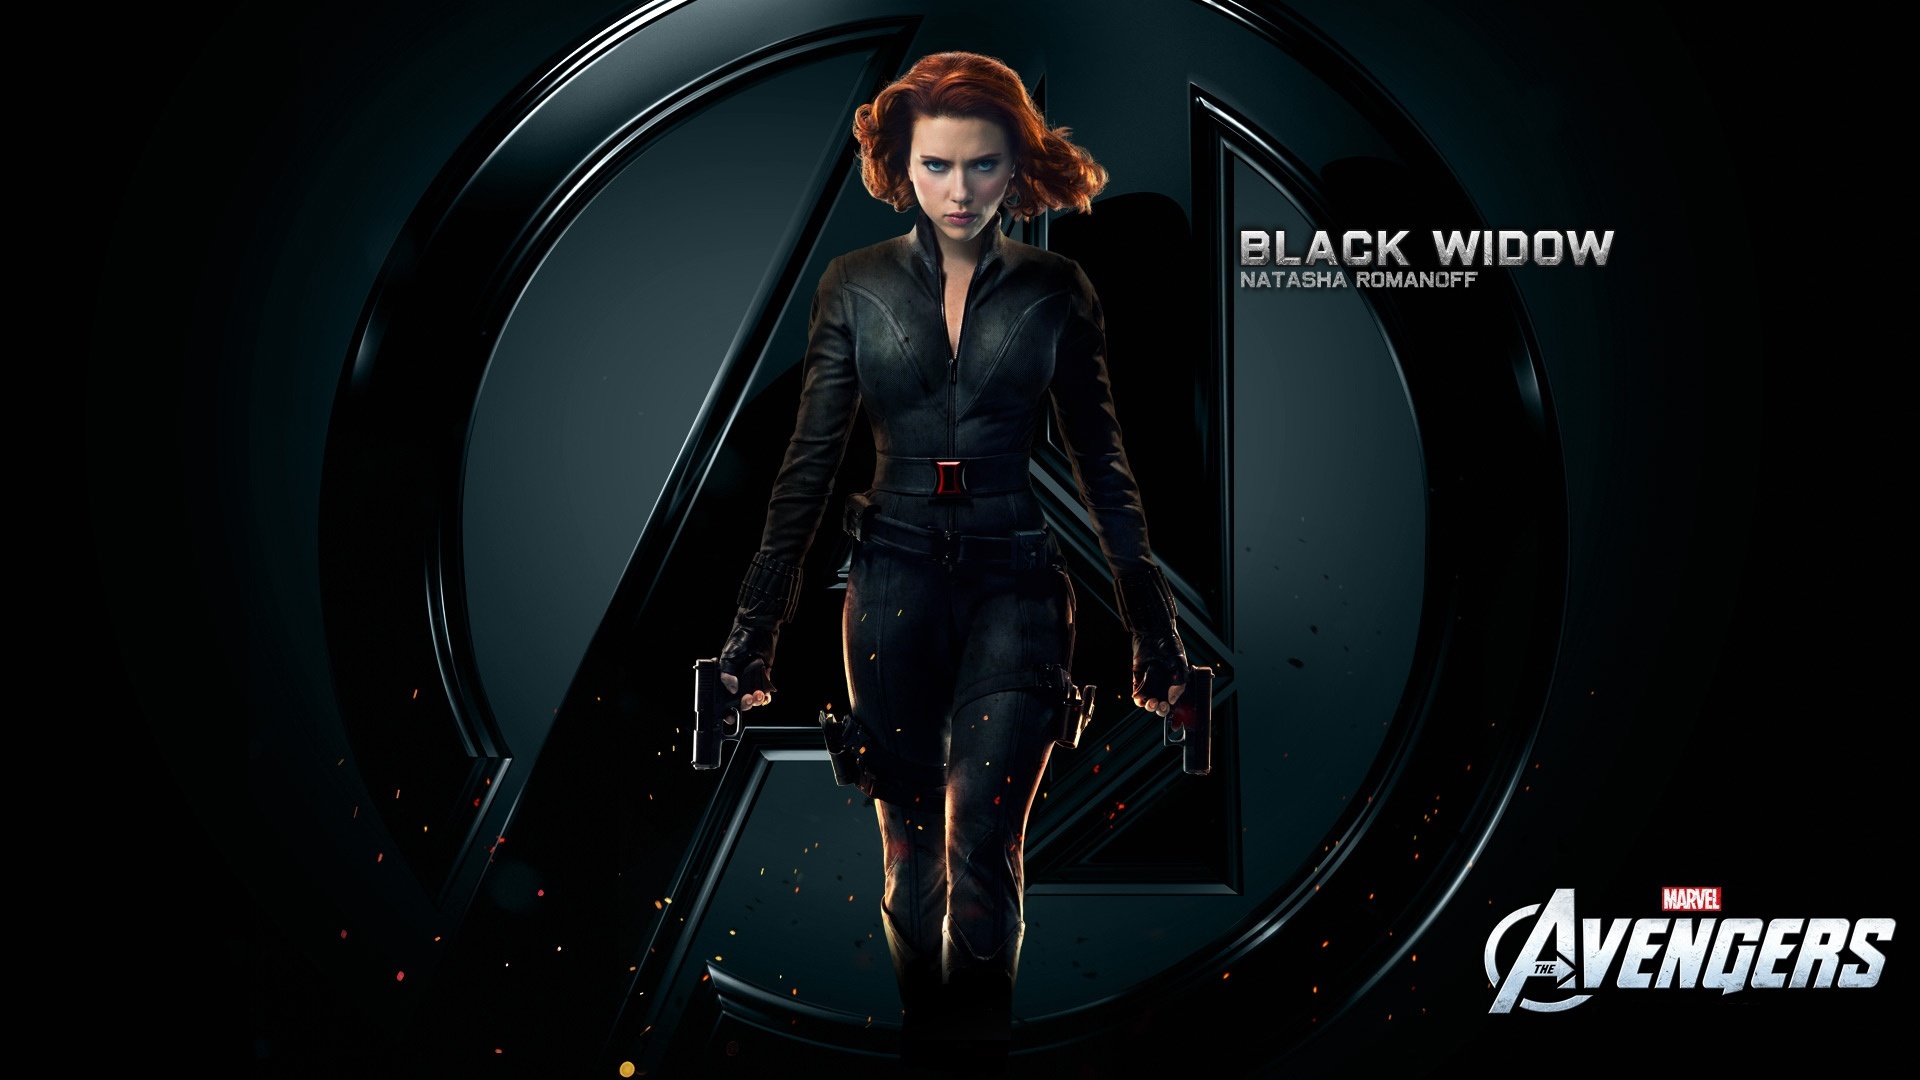 Black Widow The Avengers Wallpaper